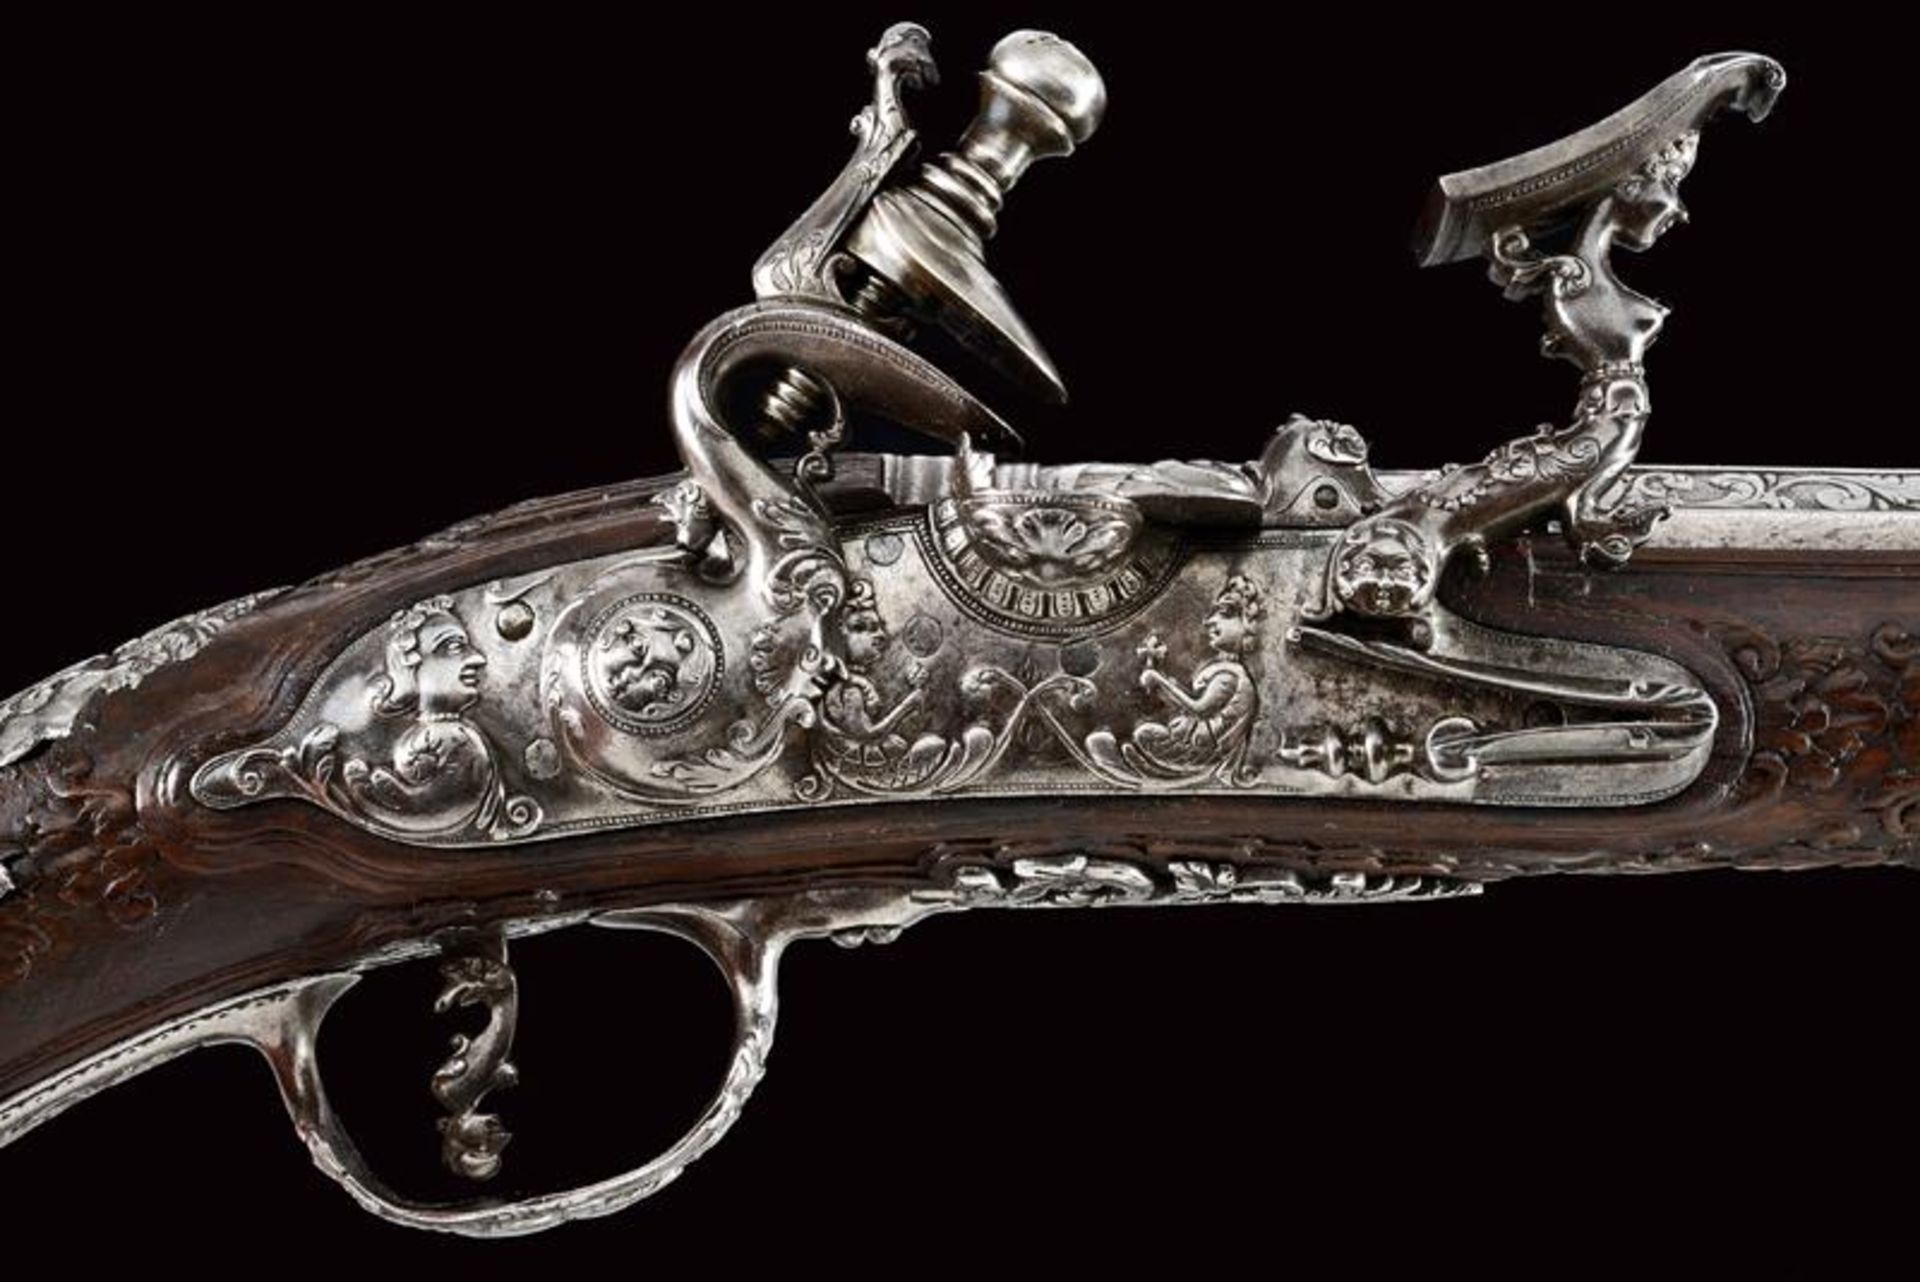 A beautiful snaphaunce lock pistol - Image 4 of 18